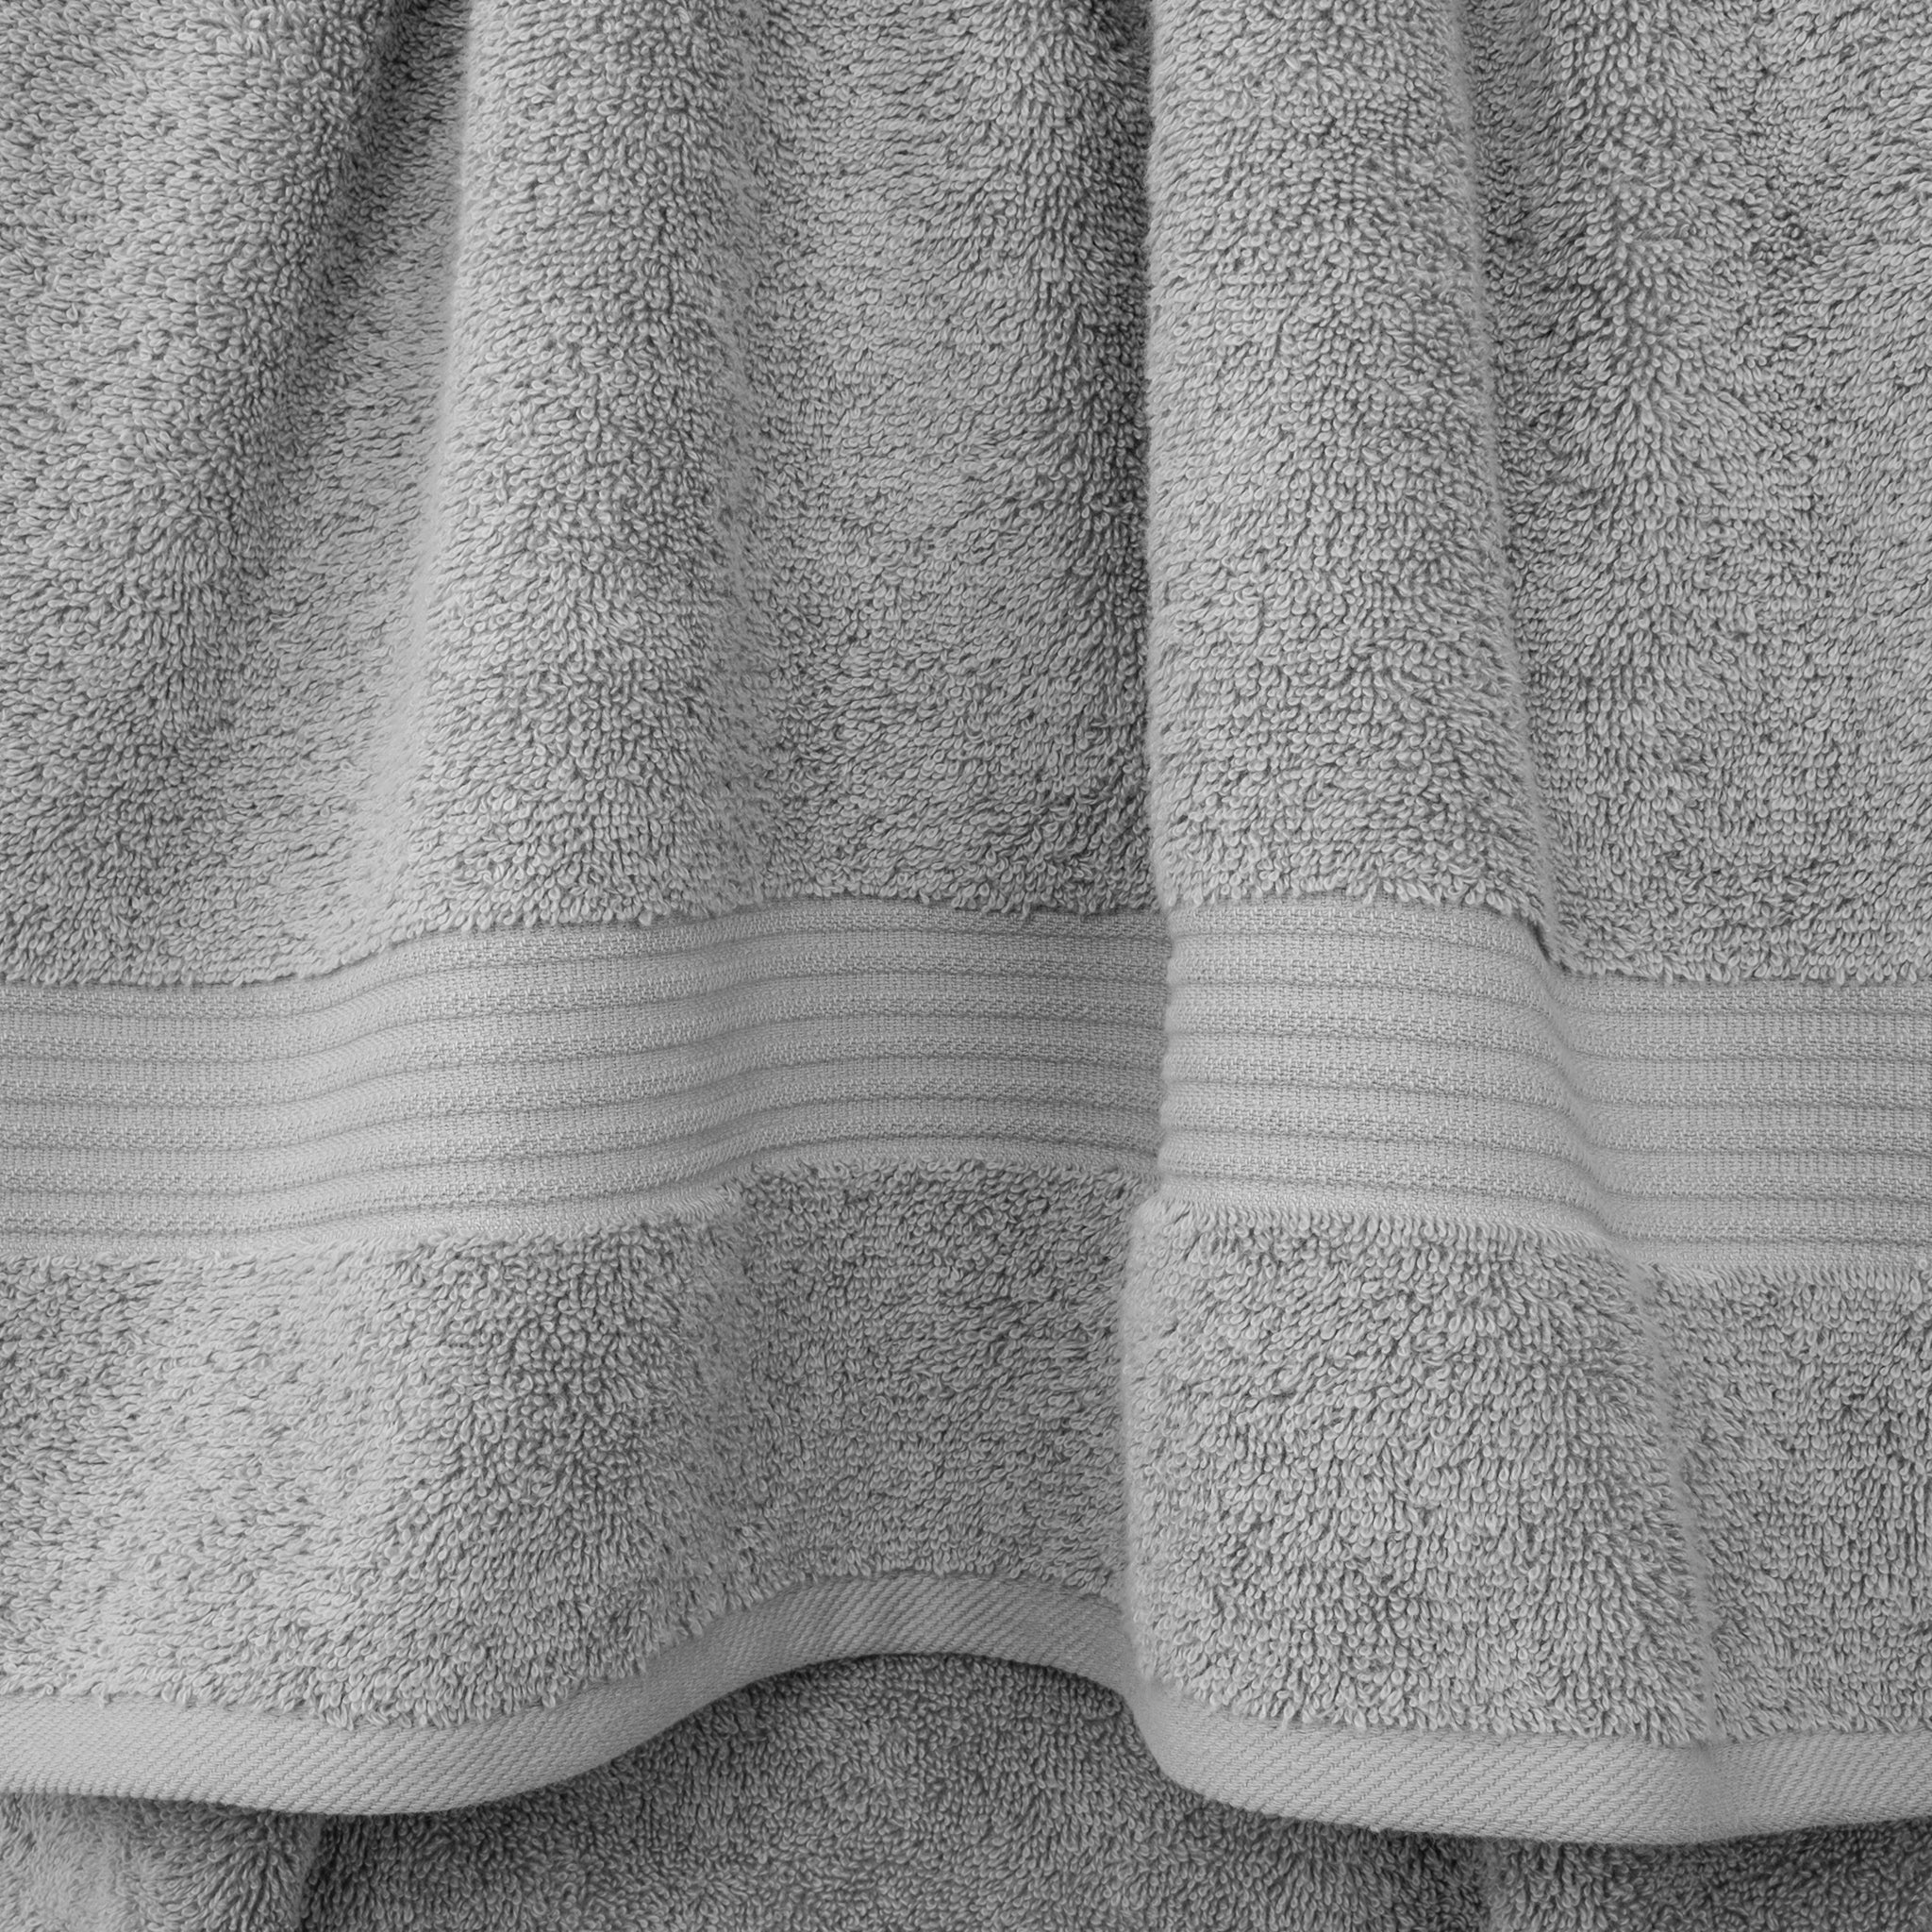 American Soft Linen Bekos 100% Cotton Turkish Towels, 4 Piece Hand Towel Set -rockridge-gray-03